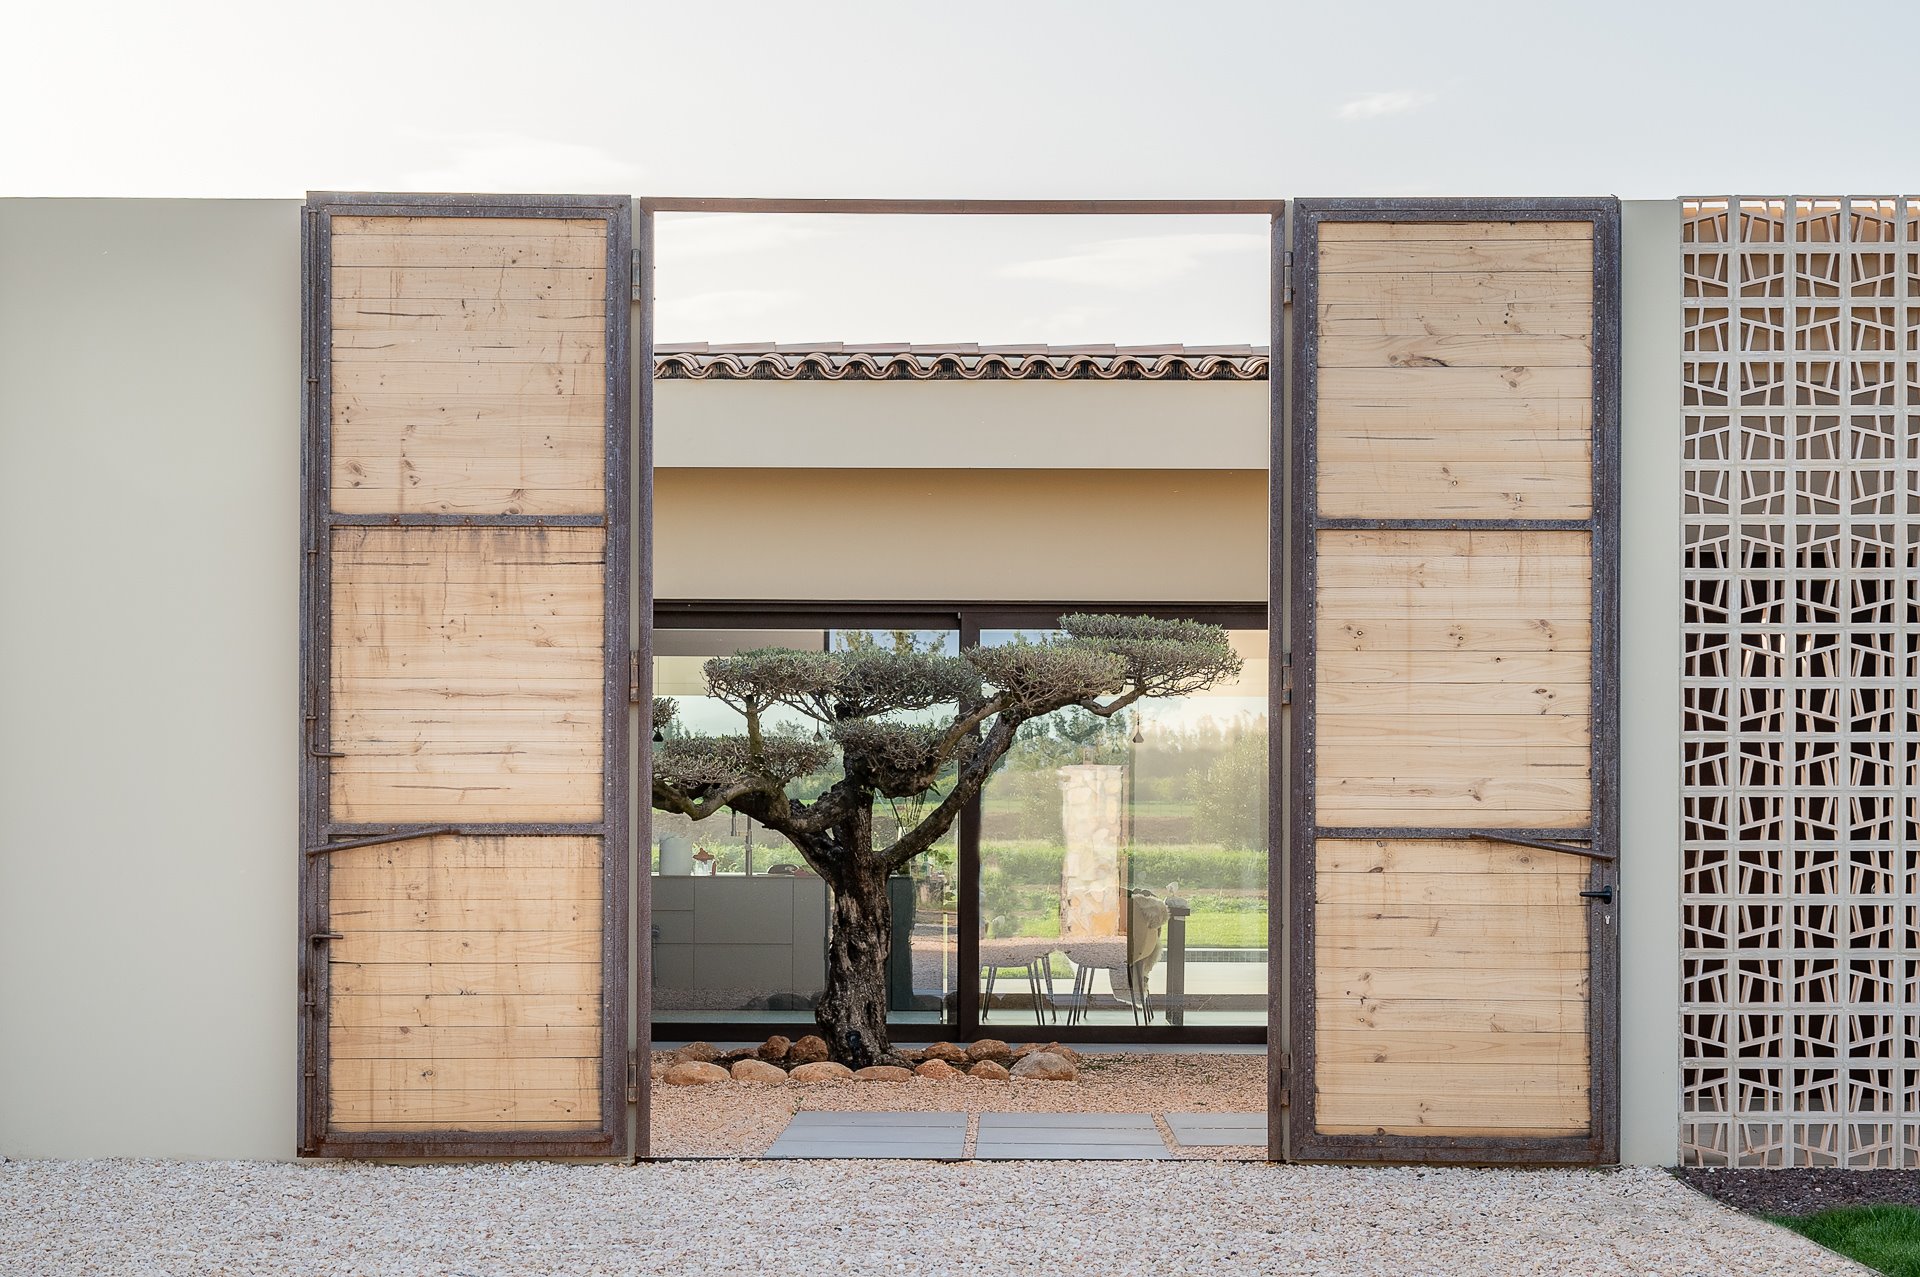 Ubiko casa prefabricada en el campo de Mallorca con tradición rural